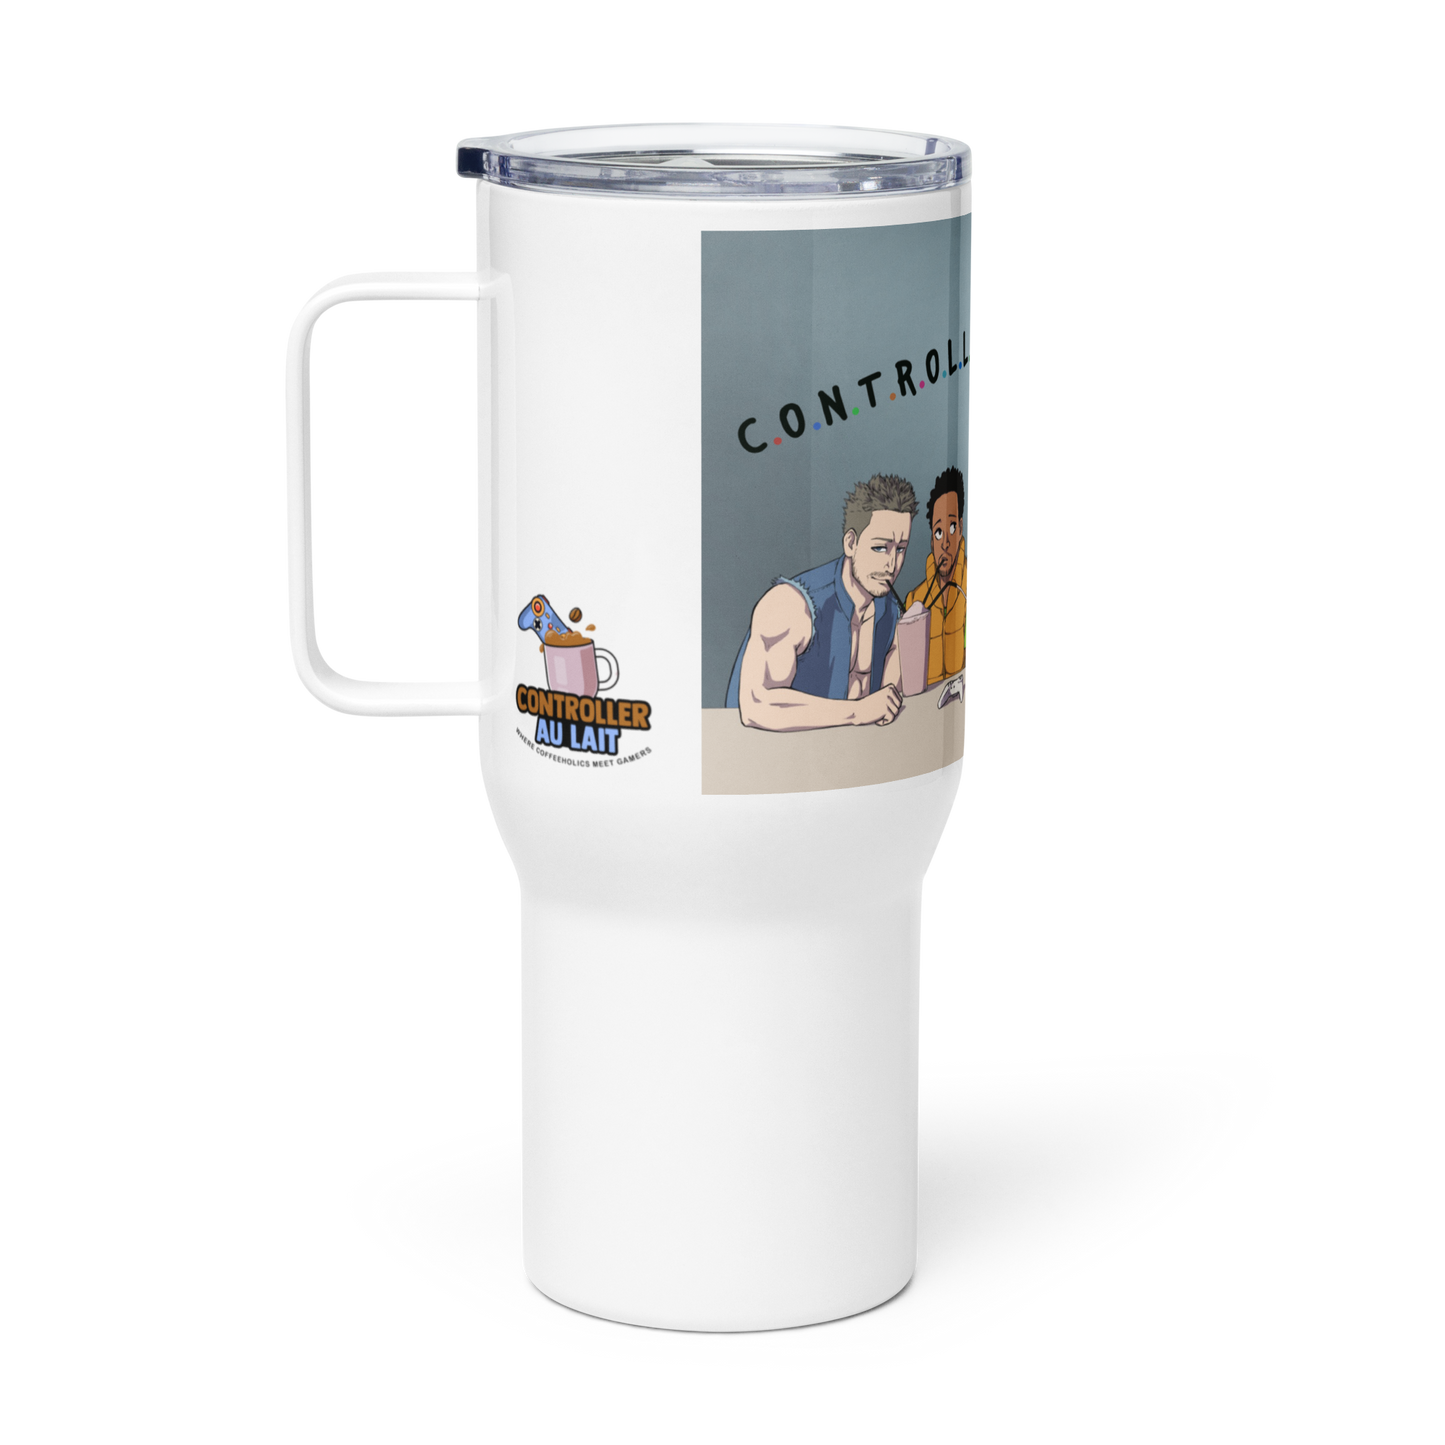 Diner travel mug with a handle